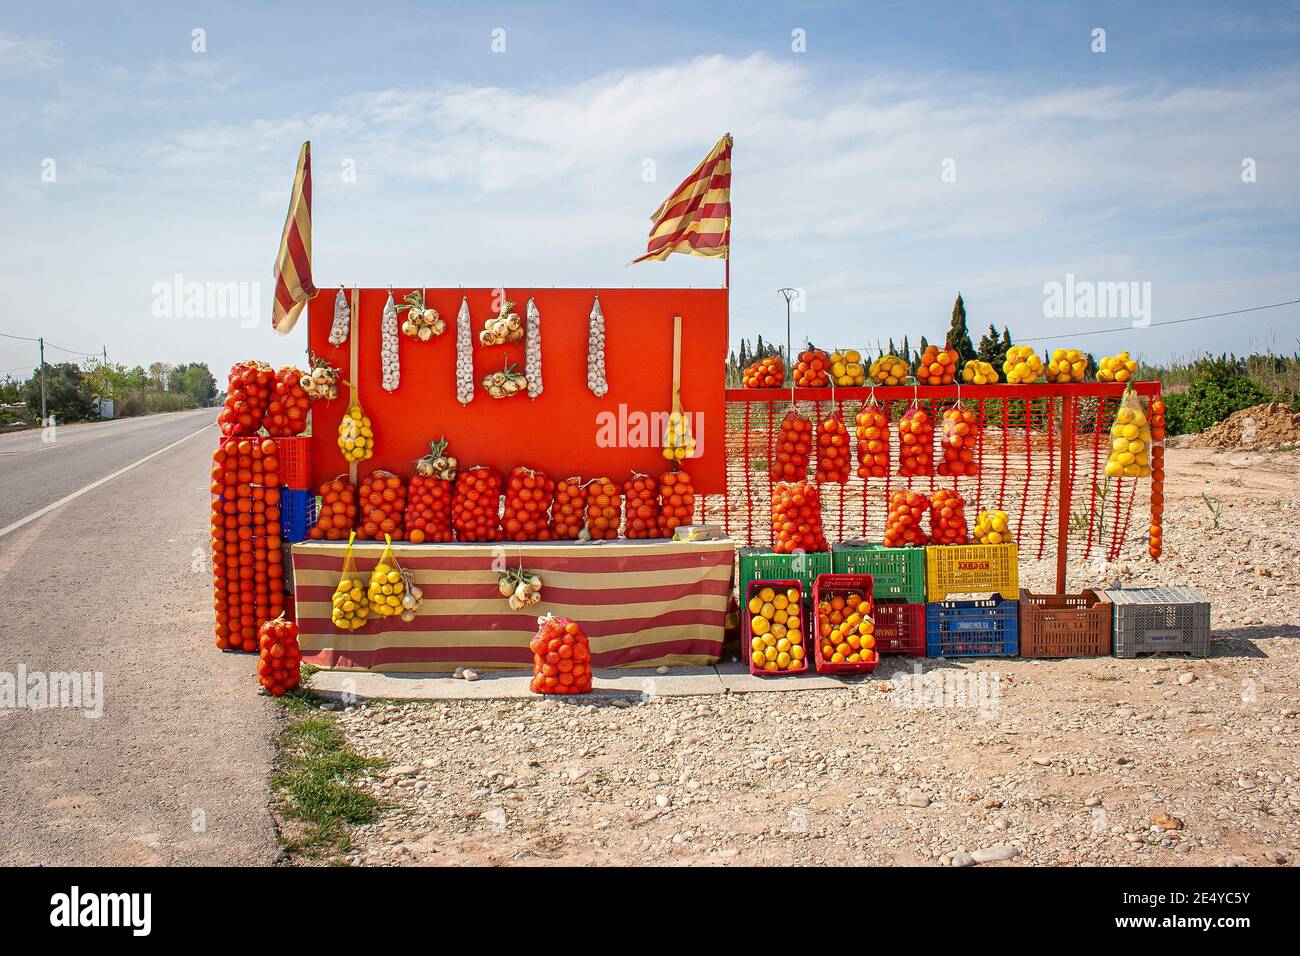 In stagione, arance valenciane in vendita sulla strada in Spagna Foto Stock